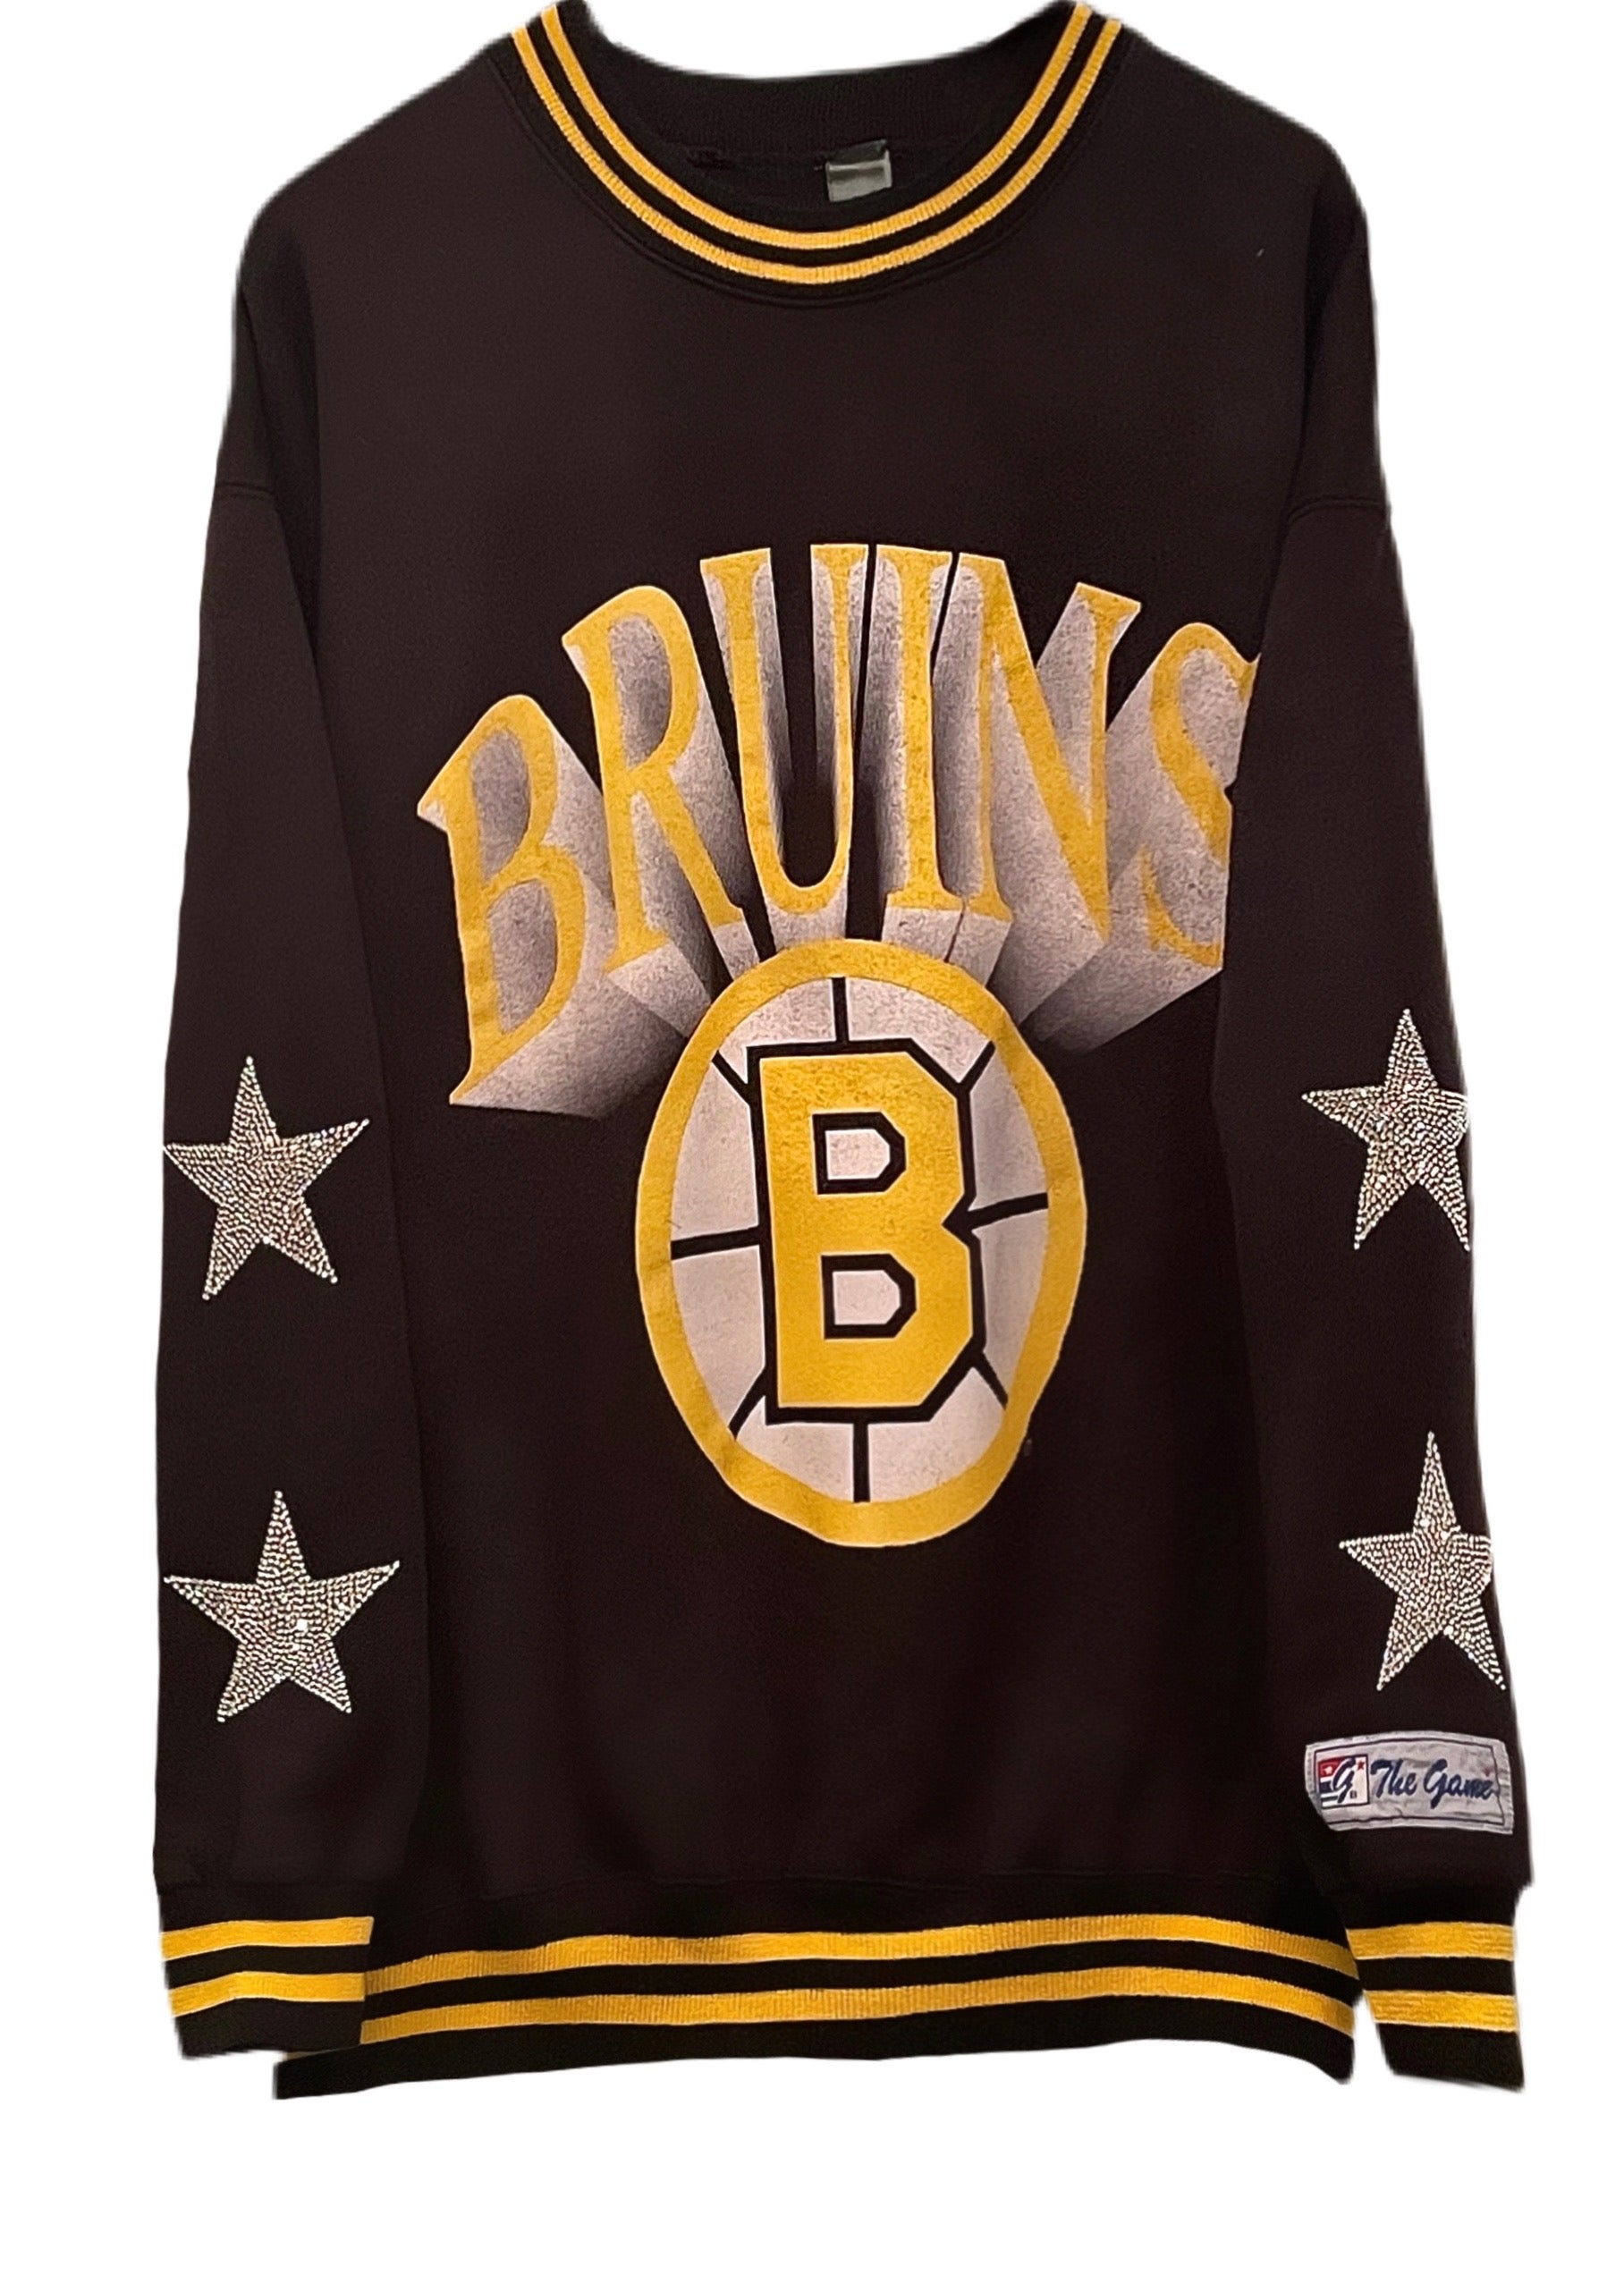 ShopCrystalRags Boston Bruins, NHL One of A Kind Vintage Sweatshirt with Crystal Stars Design